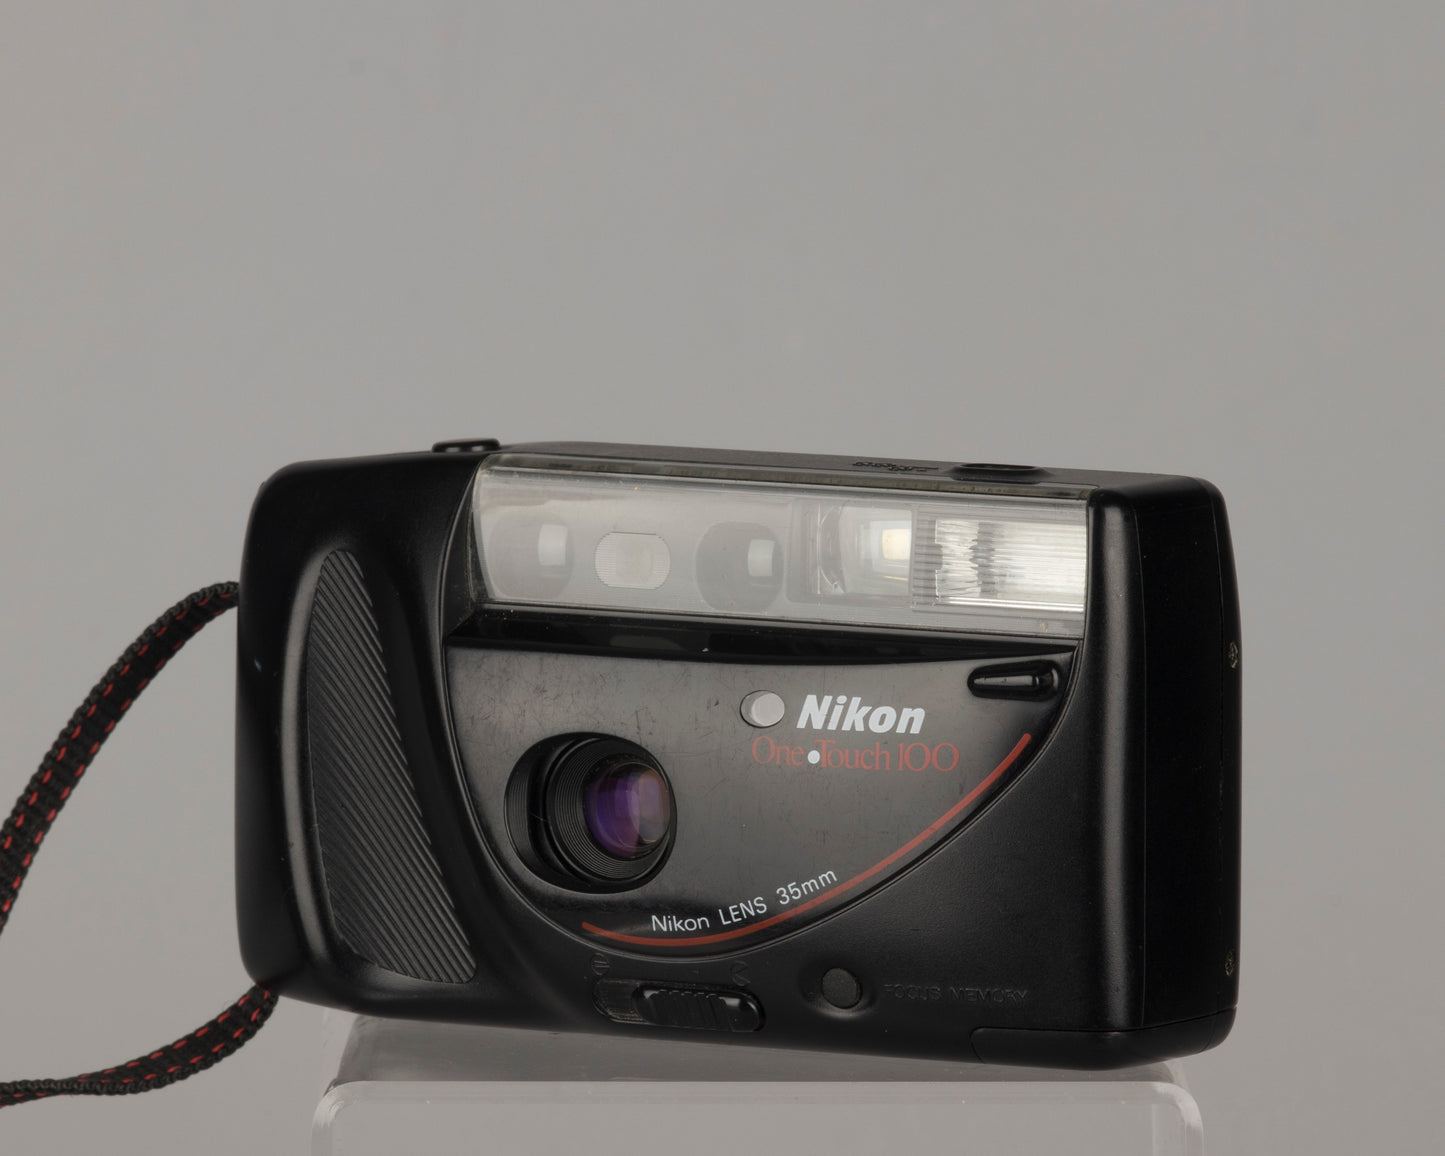 Appareil photo Nikon One Touch 100 35 mm (le flash ne fonctionne pas ; sinon OK)